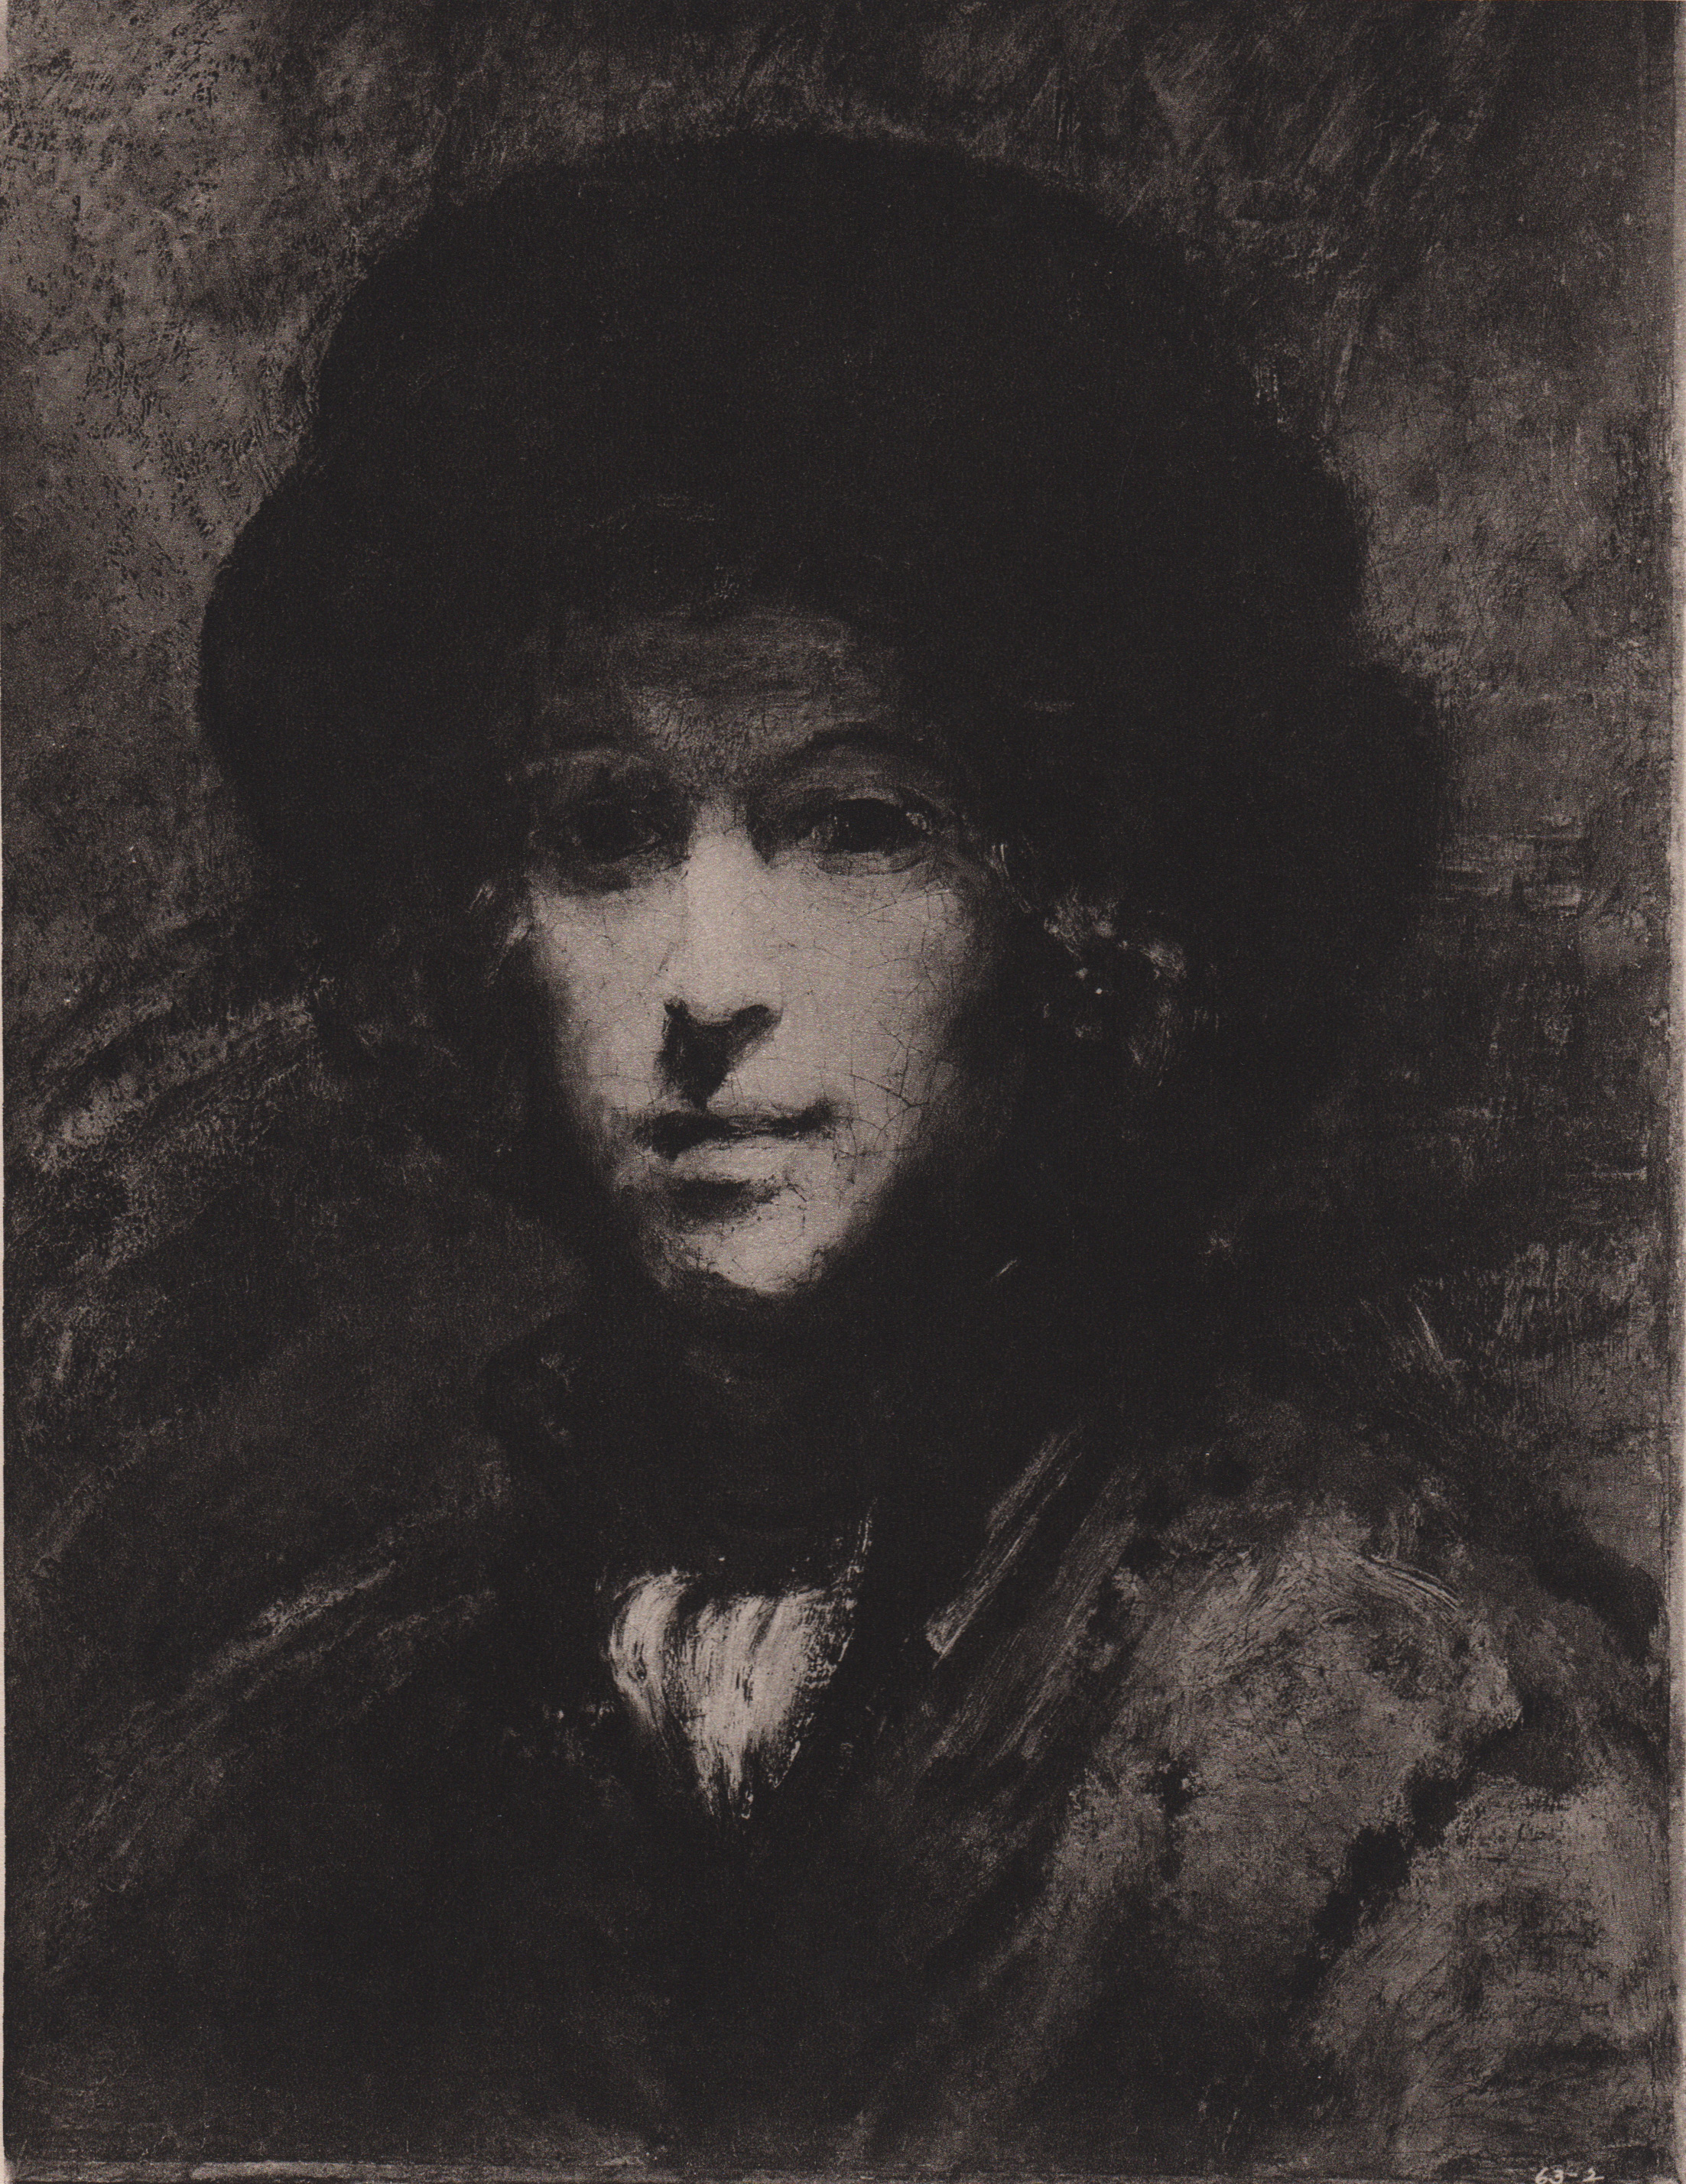 Rembrandt prints (unidentified source, circa 1890-1900)